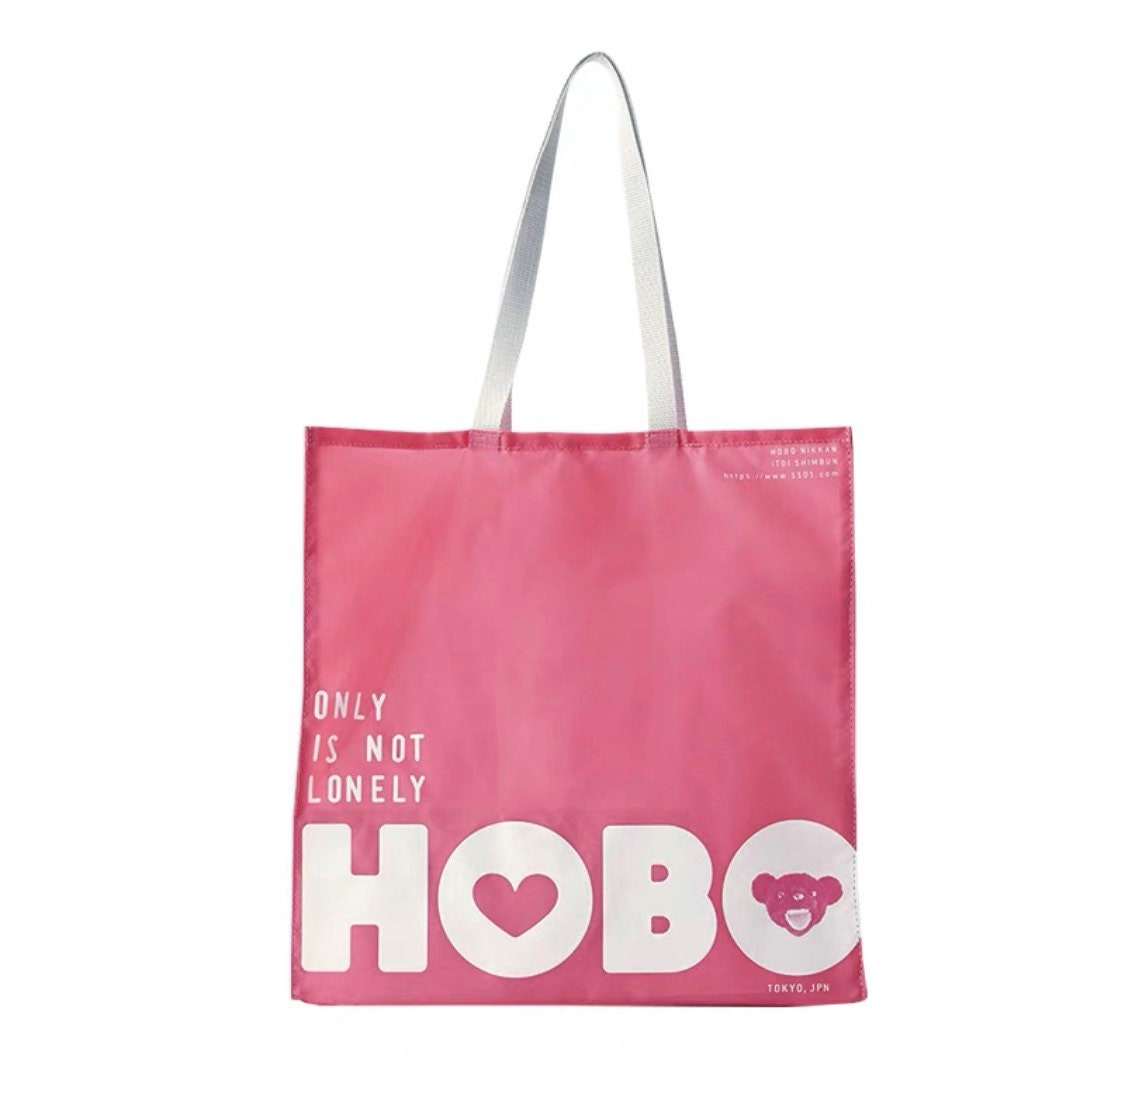 Hobonichi colorful tote bag